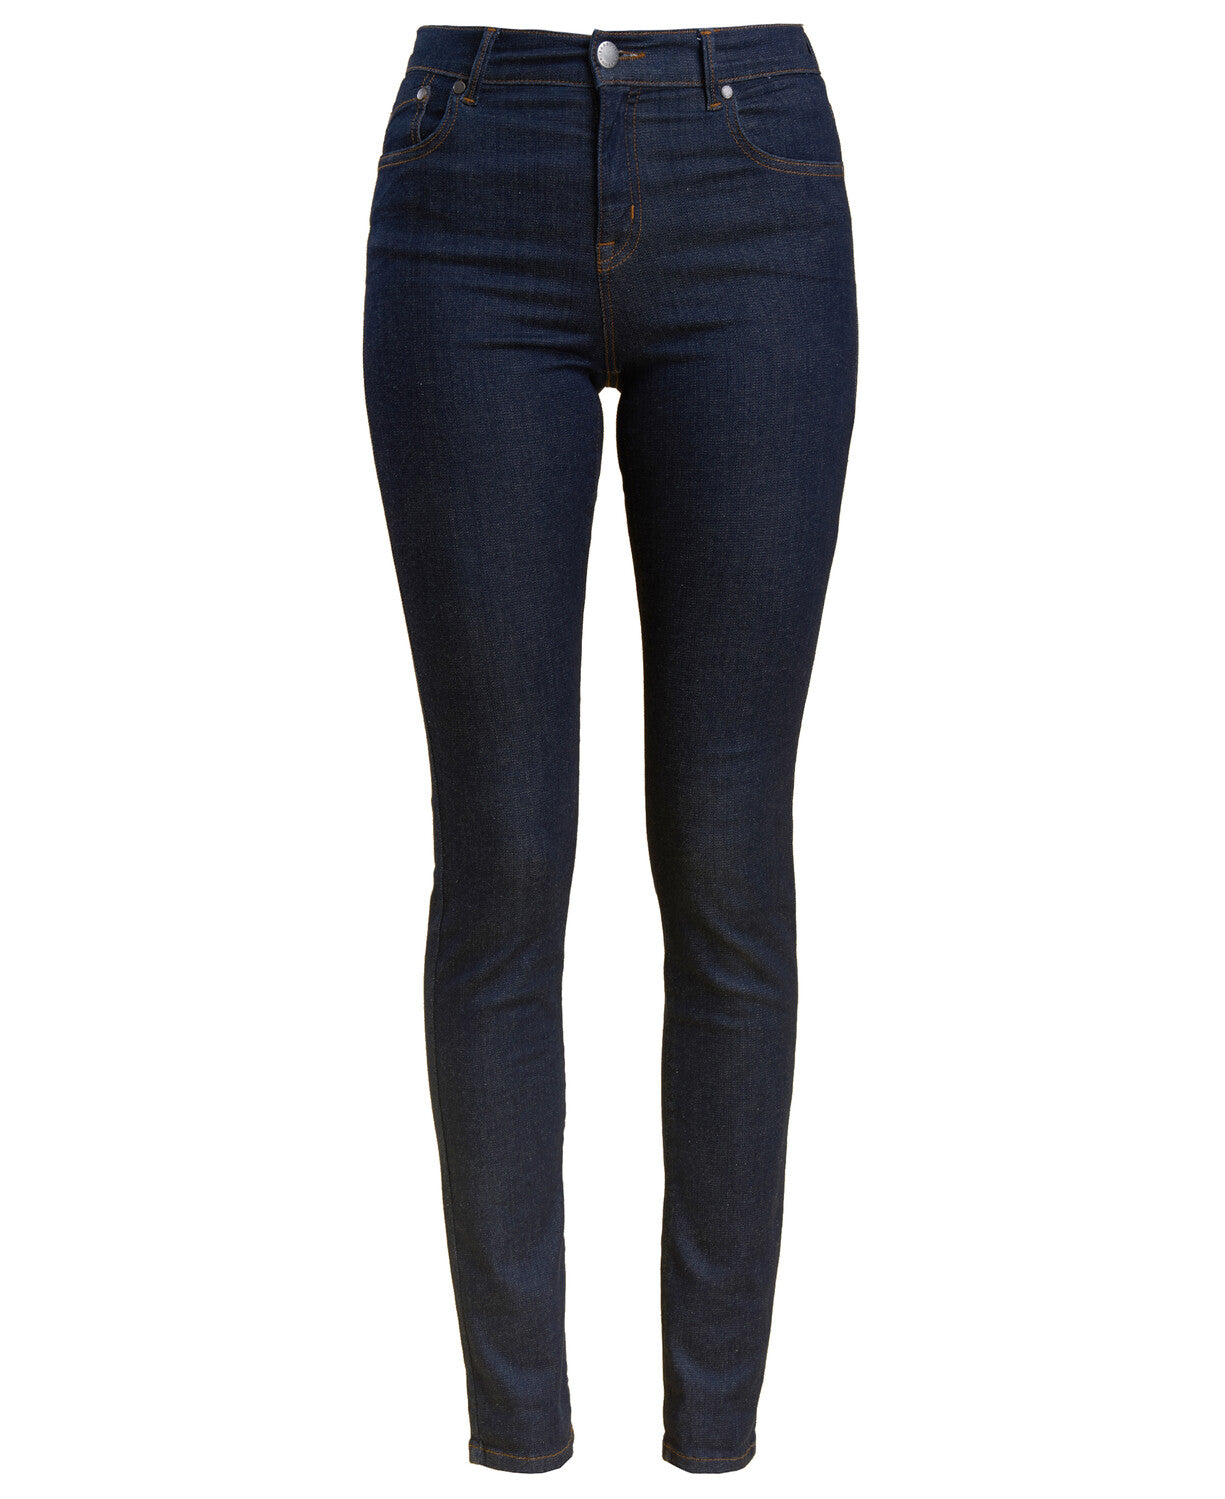 Barbour Women’s Essential Slim Jeans